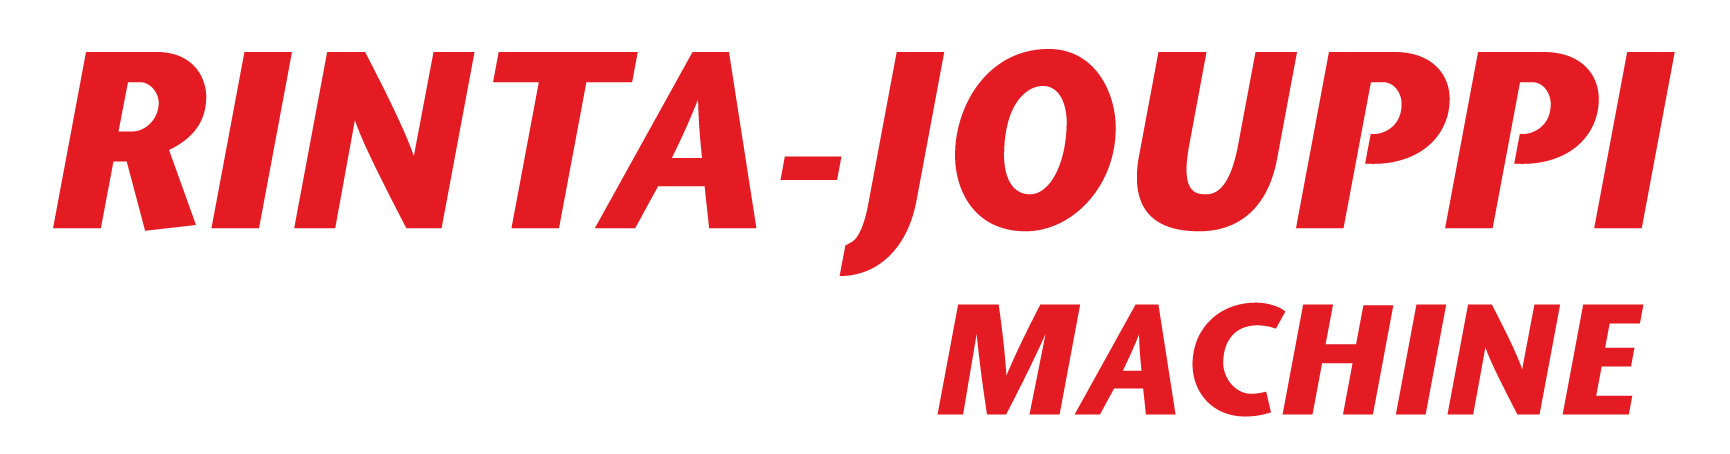 JRJ_machine_logo_RGB